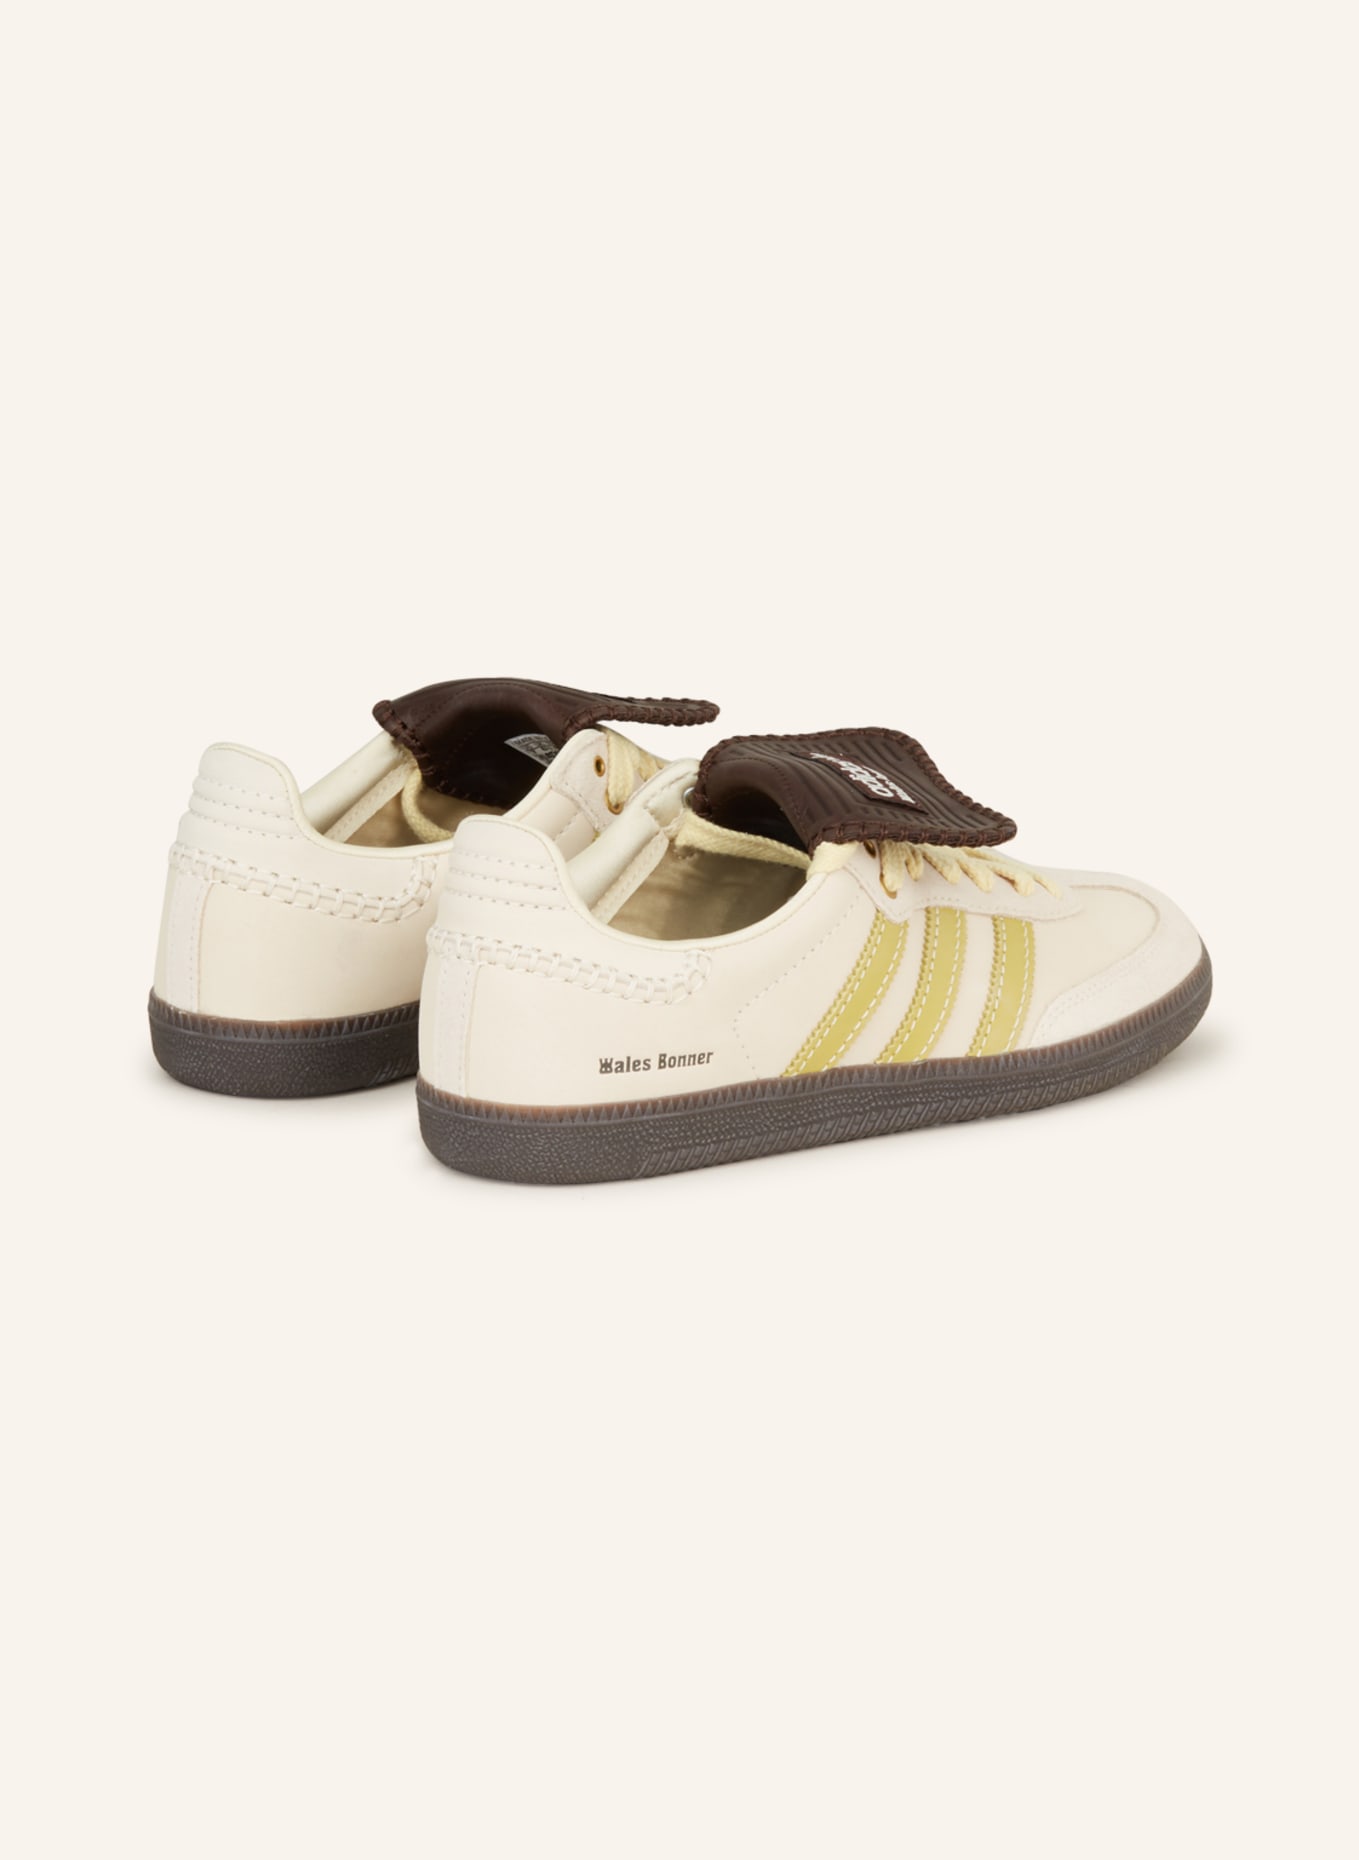 adidas Originals Sneakers WALES BONNER SAMBA in cream/ light green/ brown